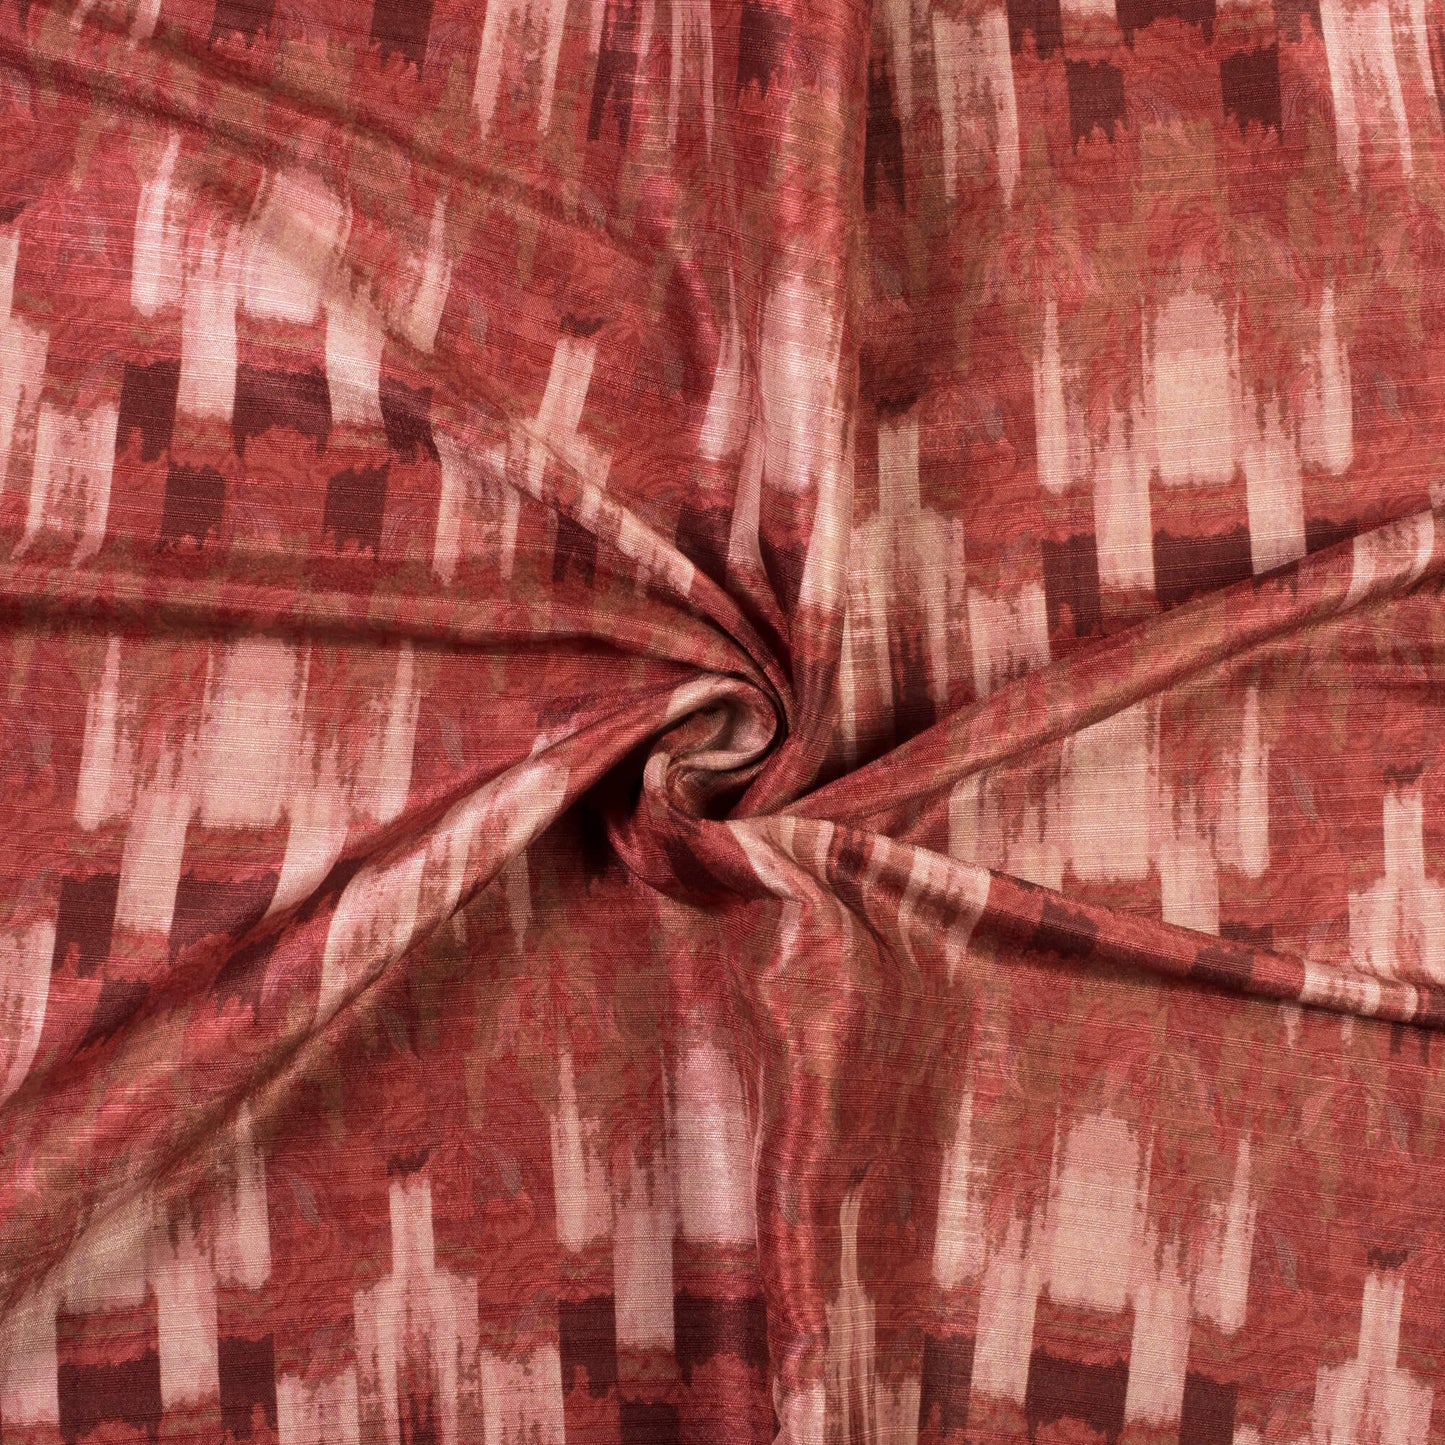 Mahogany Red And Peach Abstract Pattern Digital Print Silk Fabric